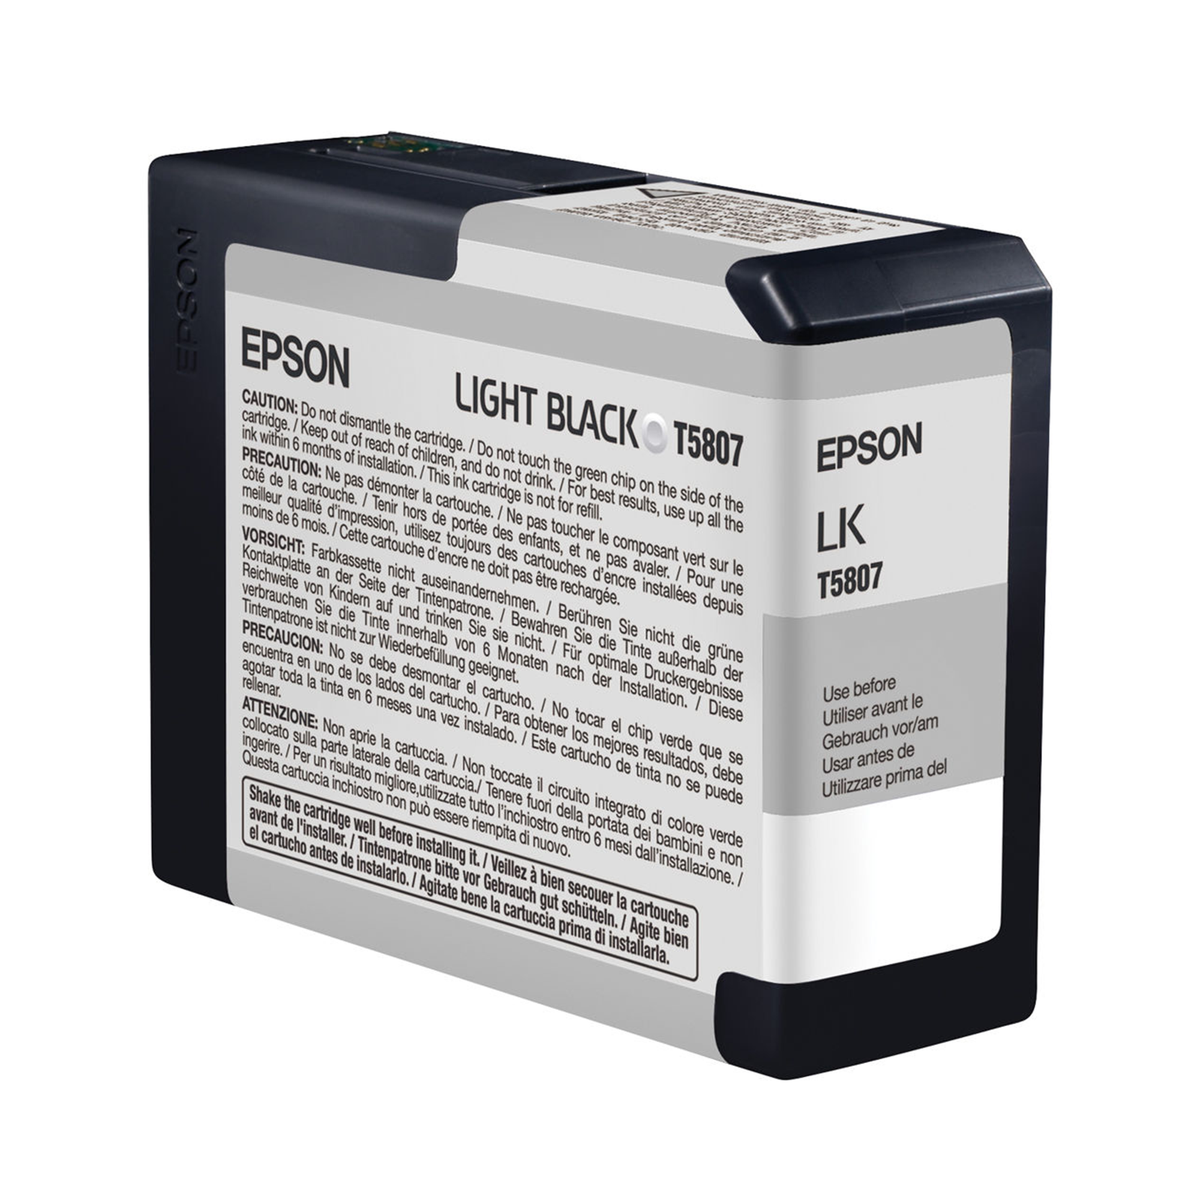 Epson T5807 UltraChrome K3 Light Black Ink Cartridge for Stylus Pro 38 —  Glazer's Camera